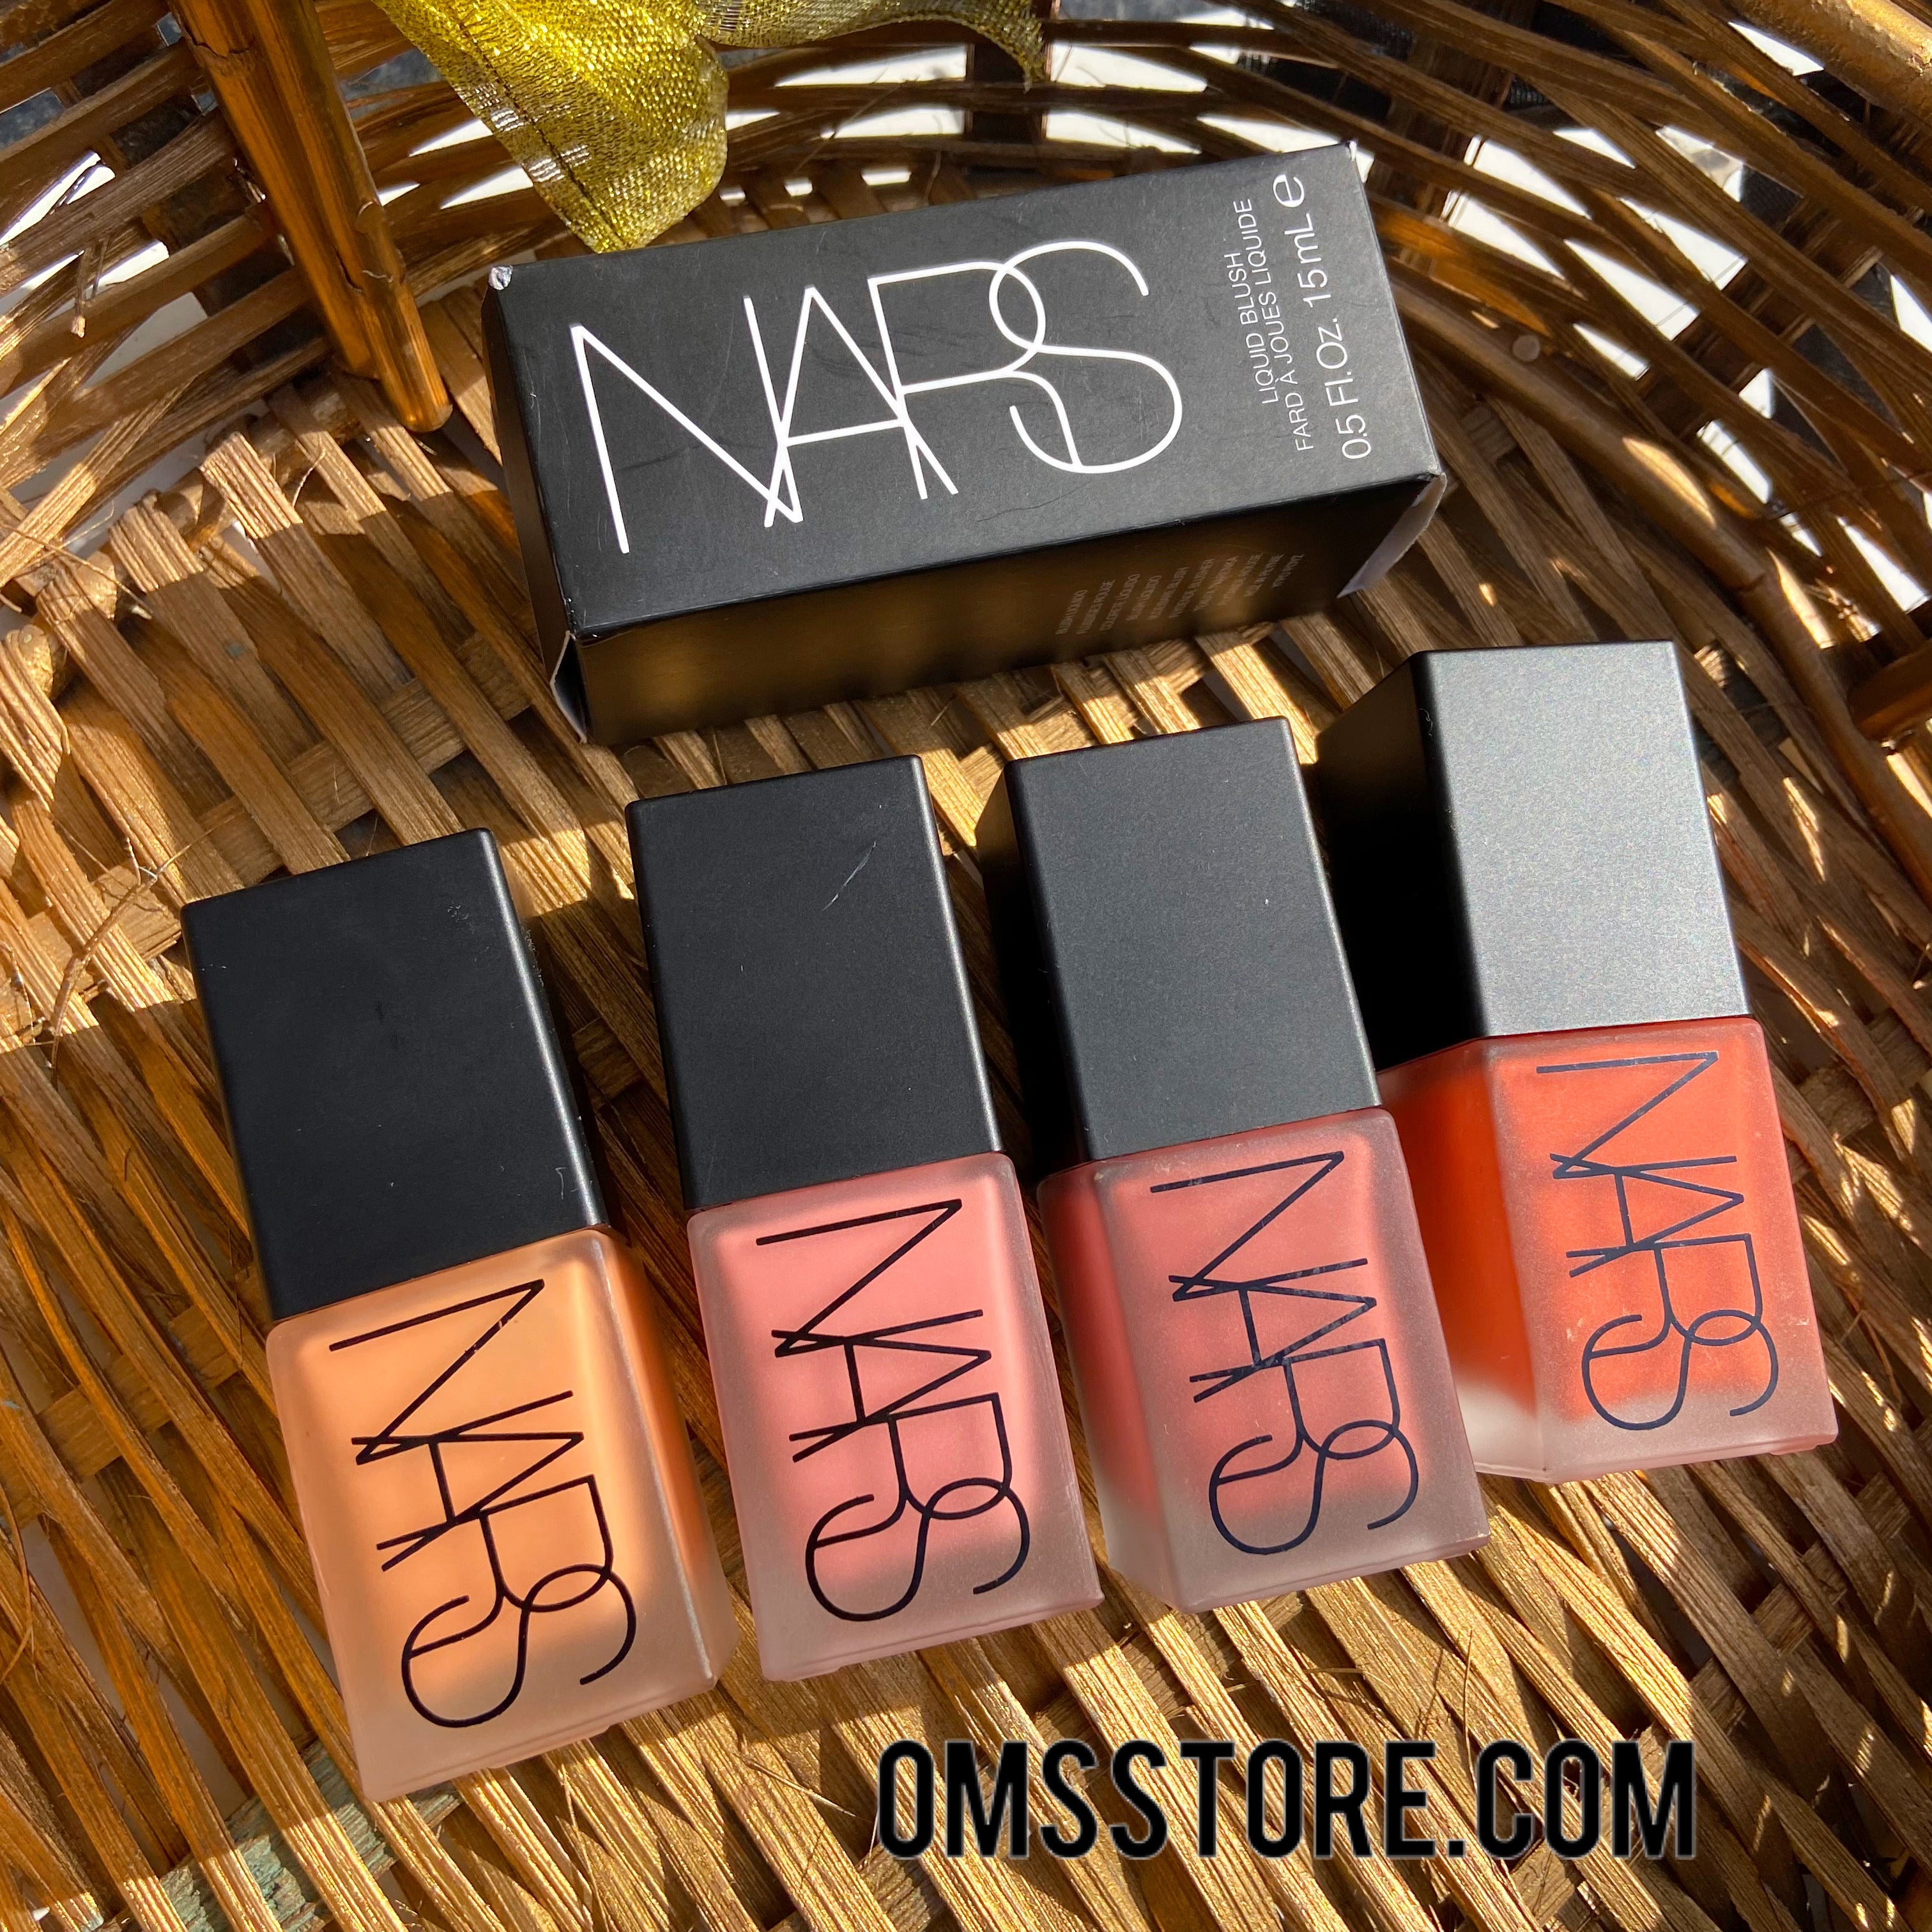 Buy NARS Cosmetics Blush - Torrid online in Pakistan 